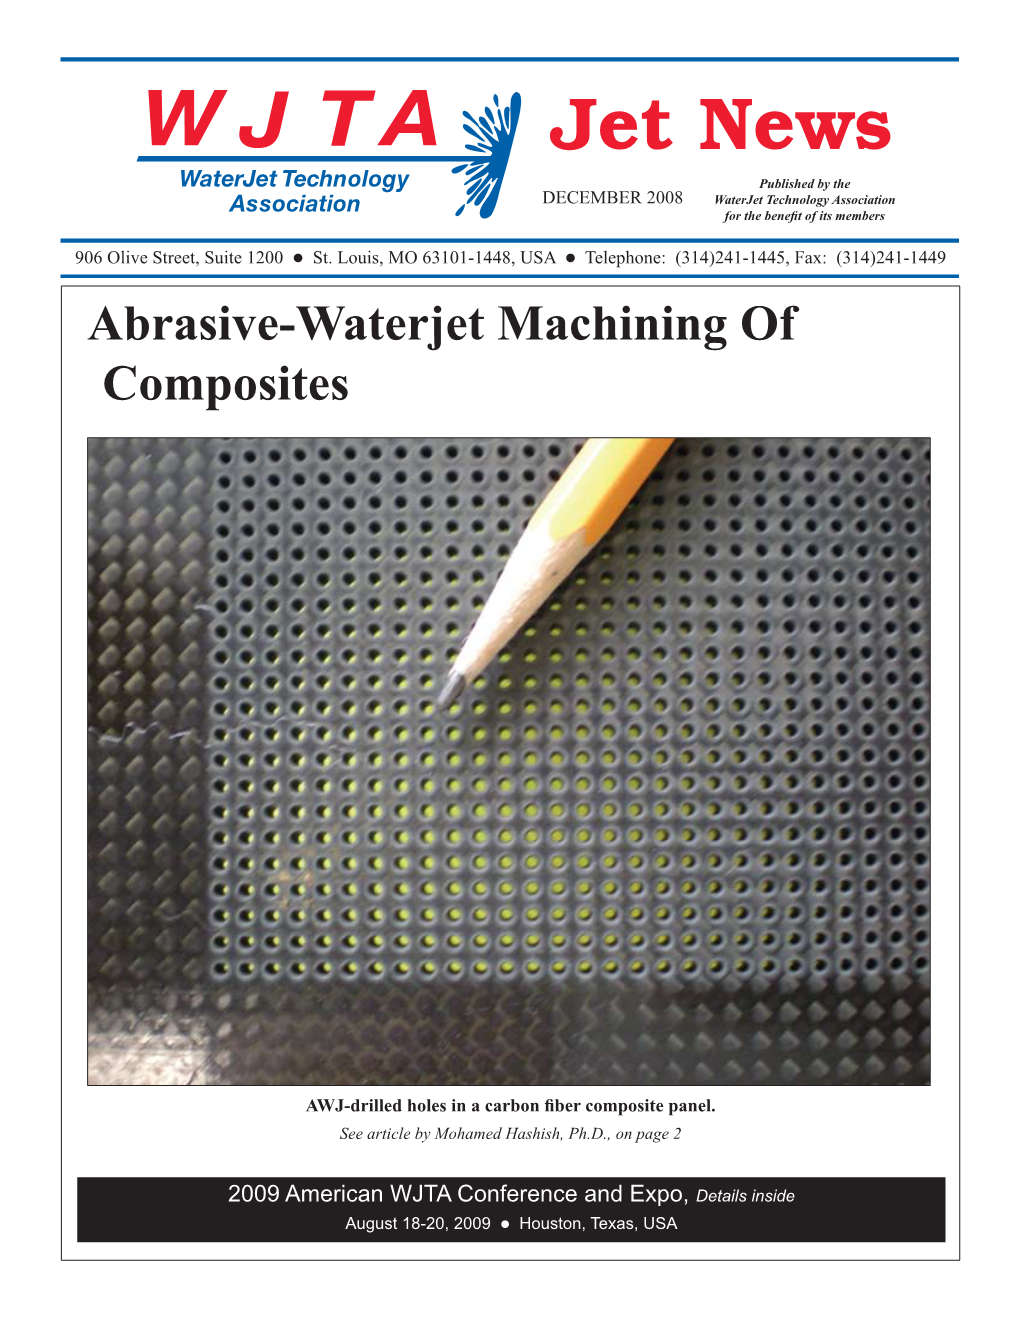 Abrasive-Waterjet Machining of Composites